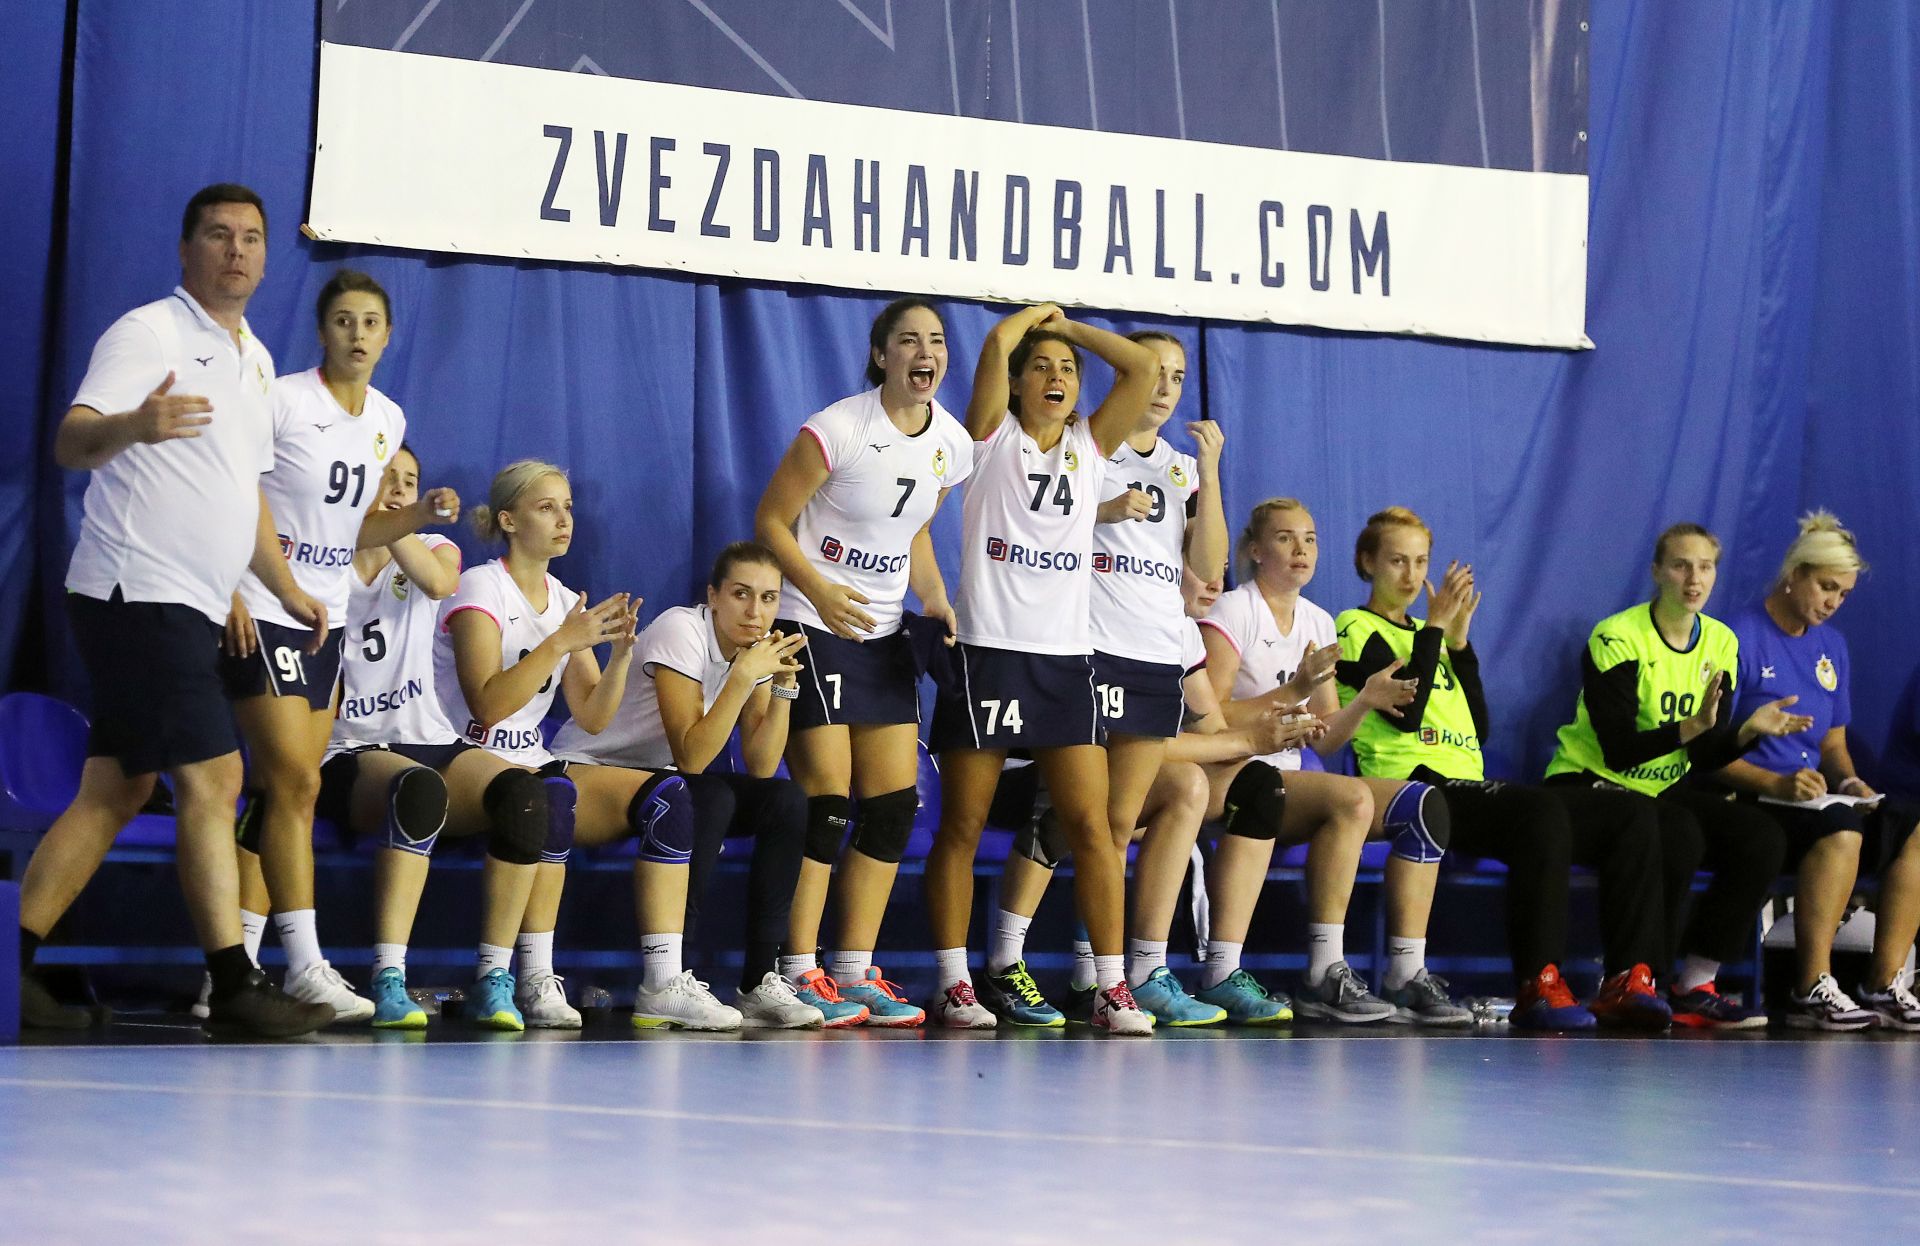 ЦСКА на Zvezda Handball Cup